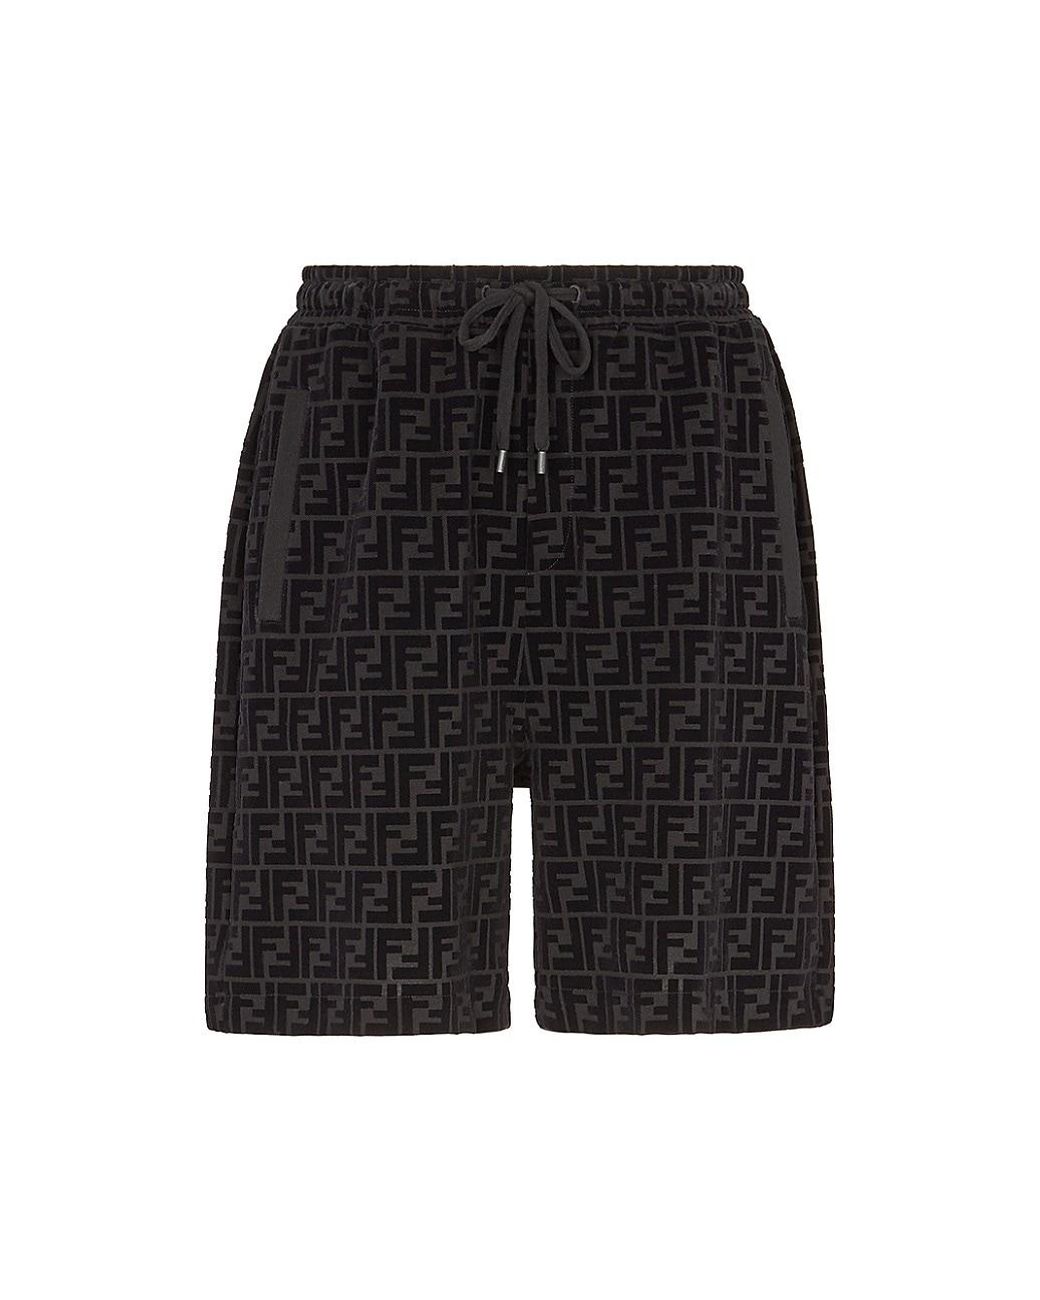 Fendi Cotton Ff Logo Bermuda Shorts in Nero (Black) for Men - Lyst